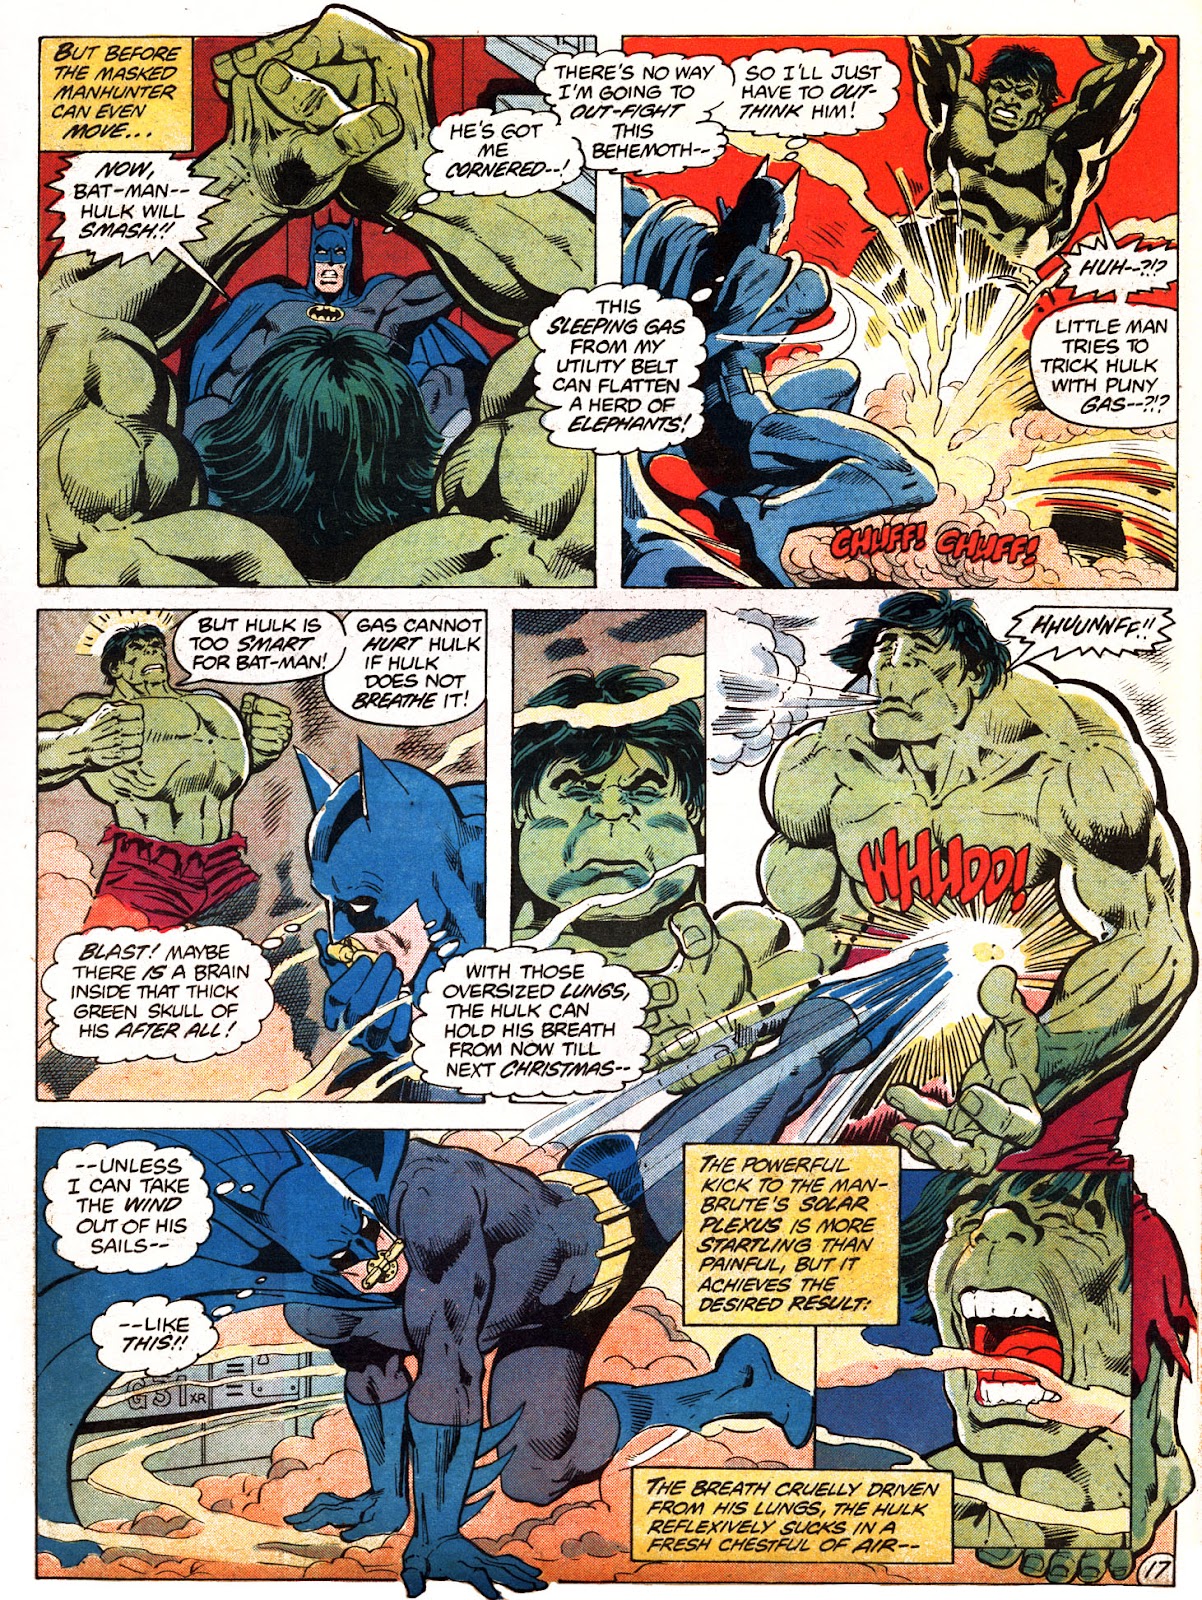 Batman Vs The Incredible Hulk Full Viewcomic Reading